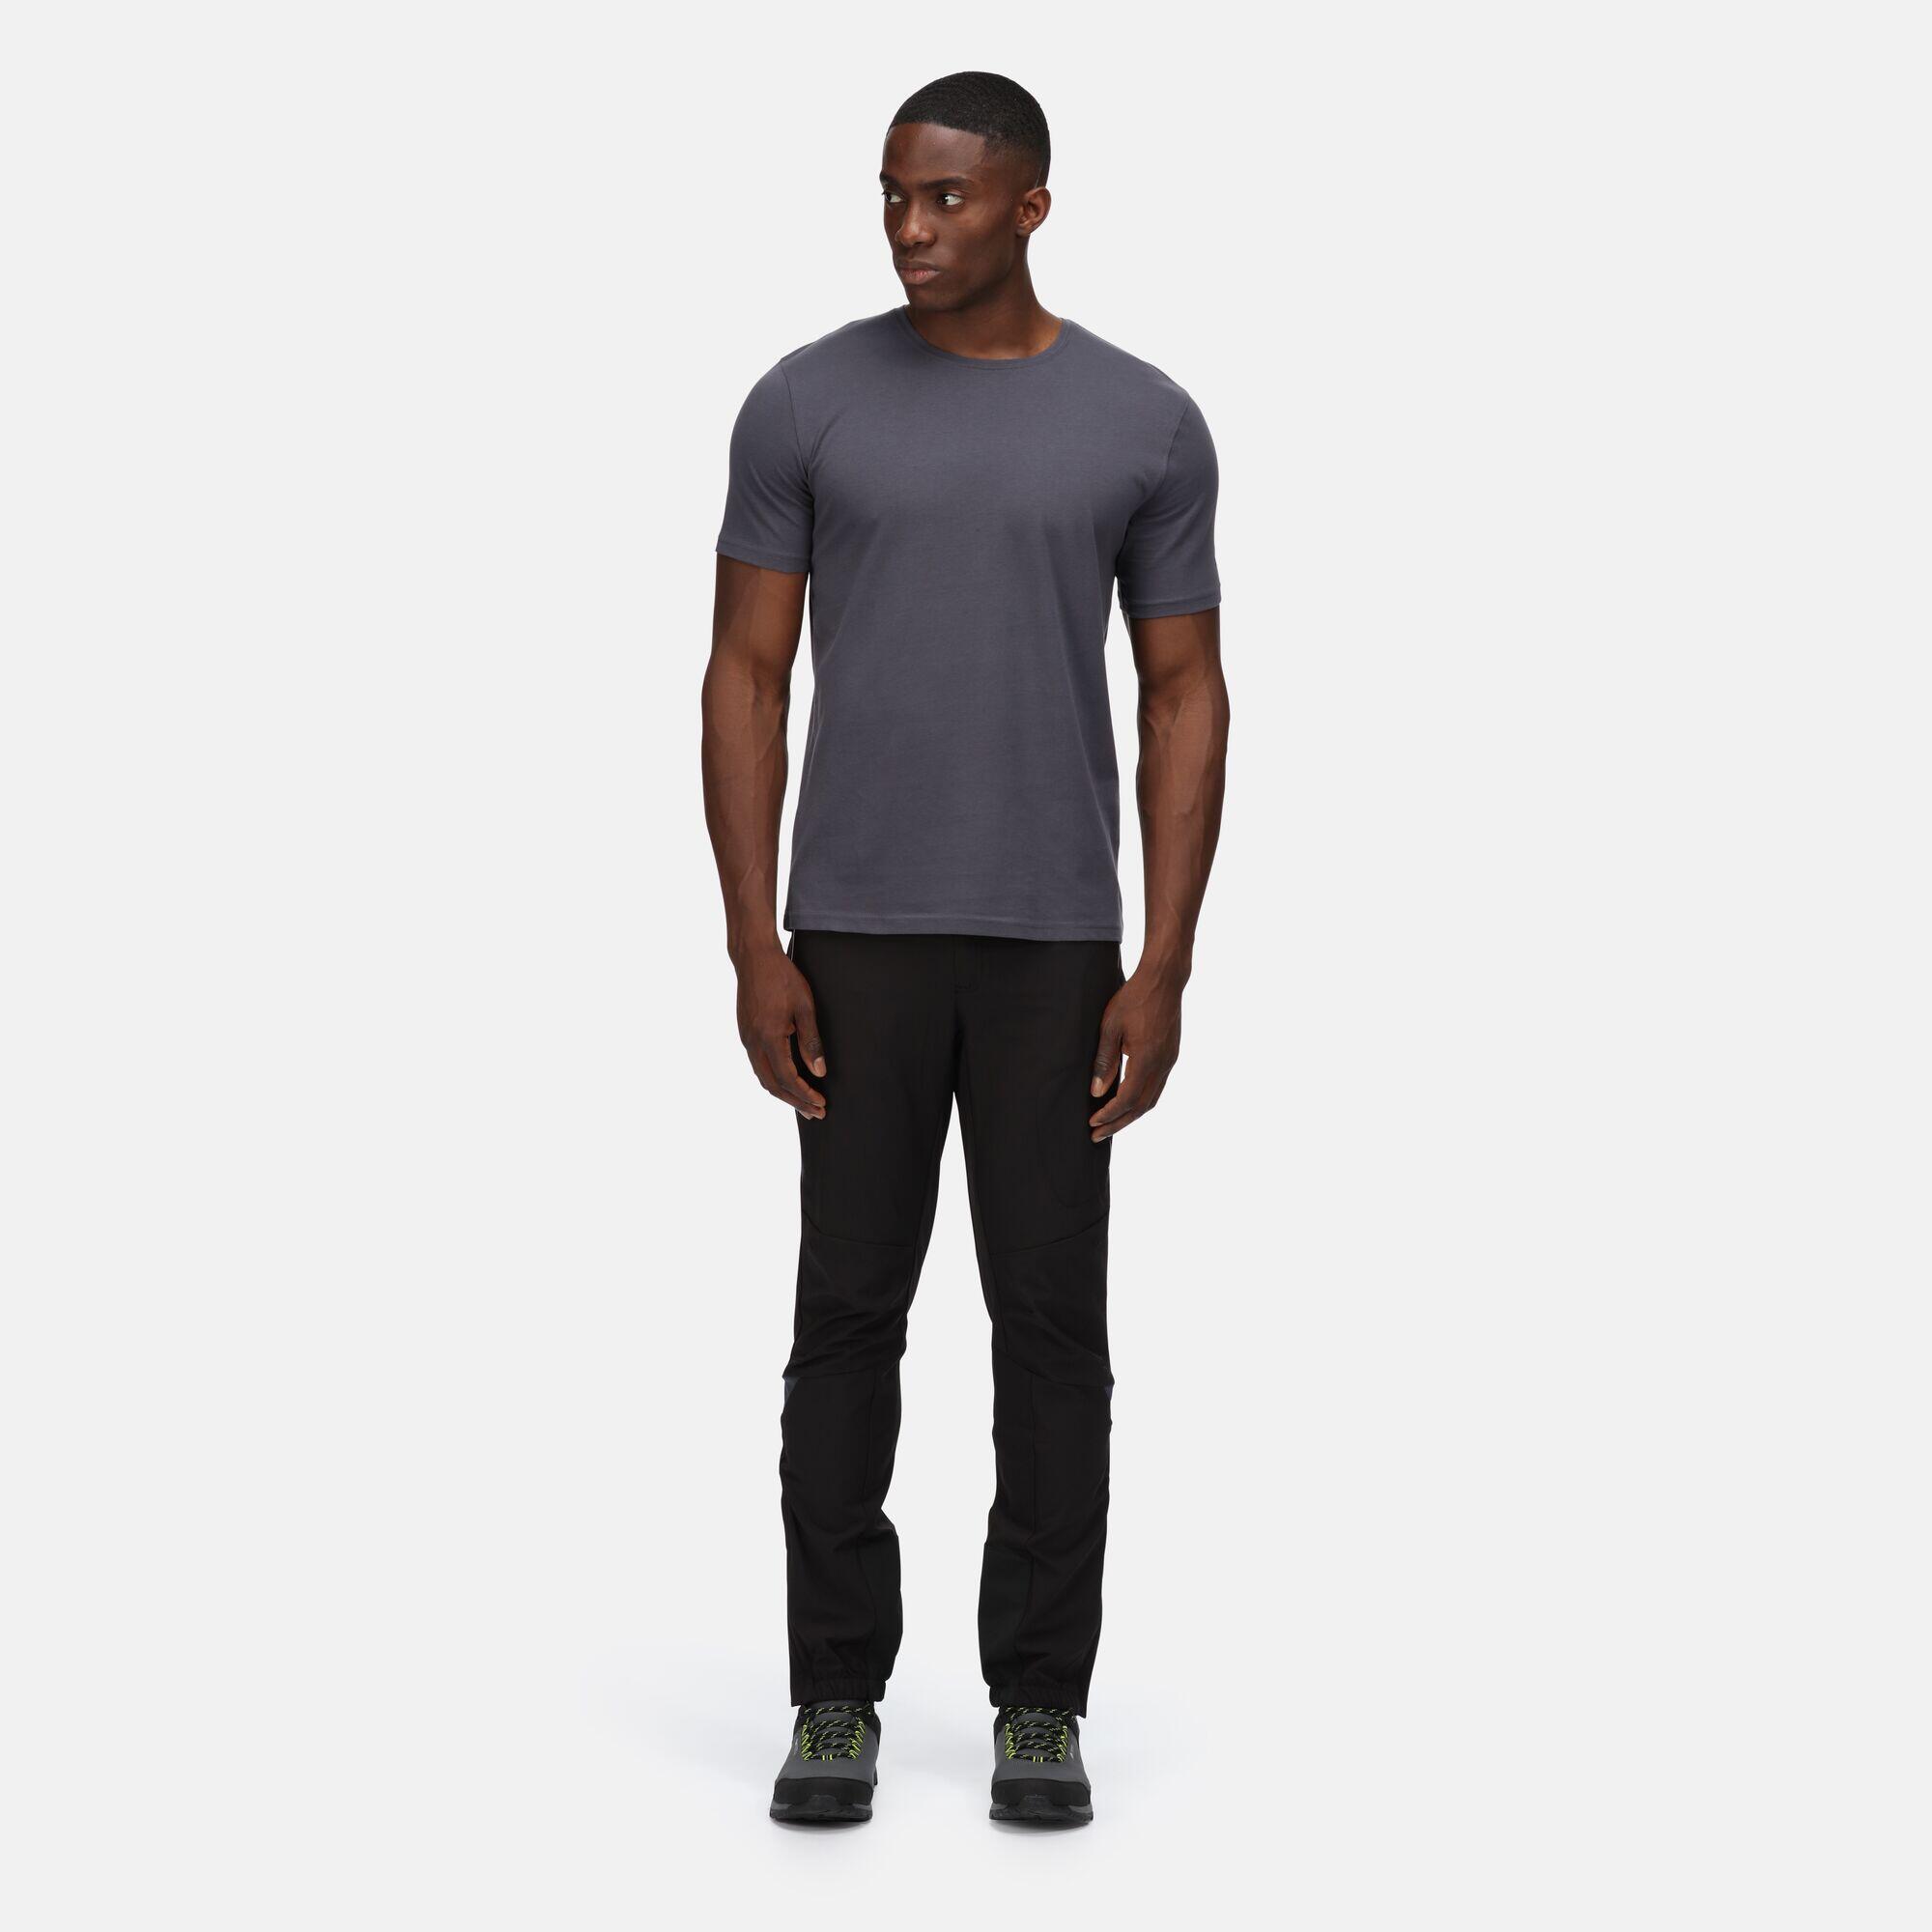 Tait Men's Walking Short Sleeve T-Shirt - Grey 3/5